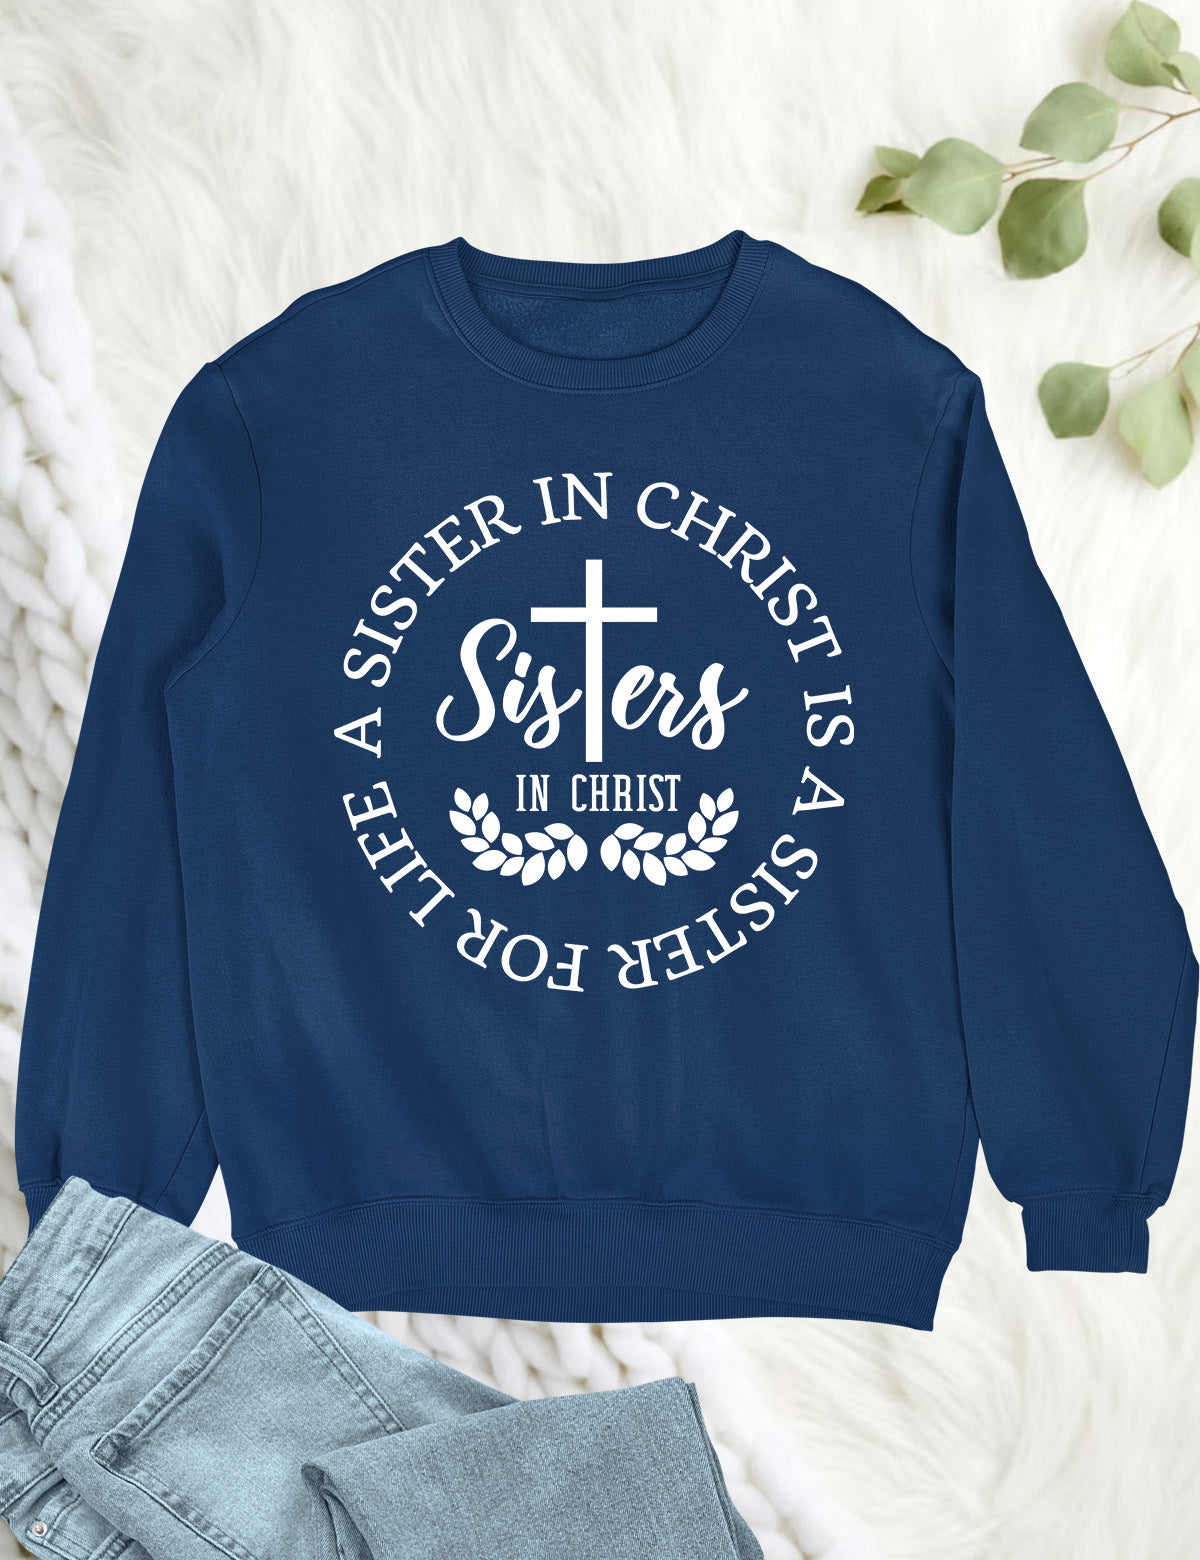 Sisters in Christ Church Women Sweatshirt